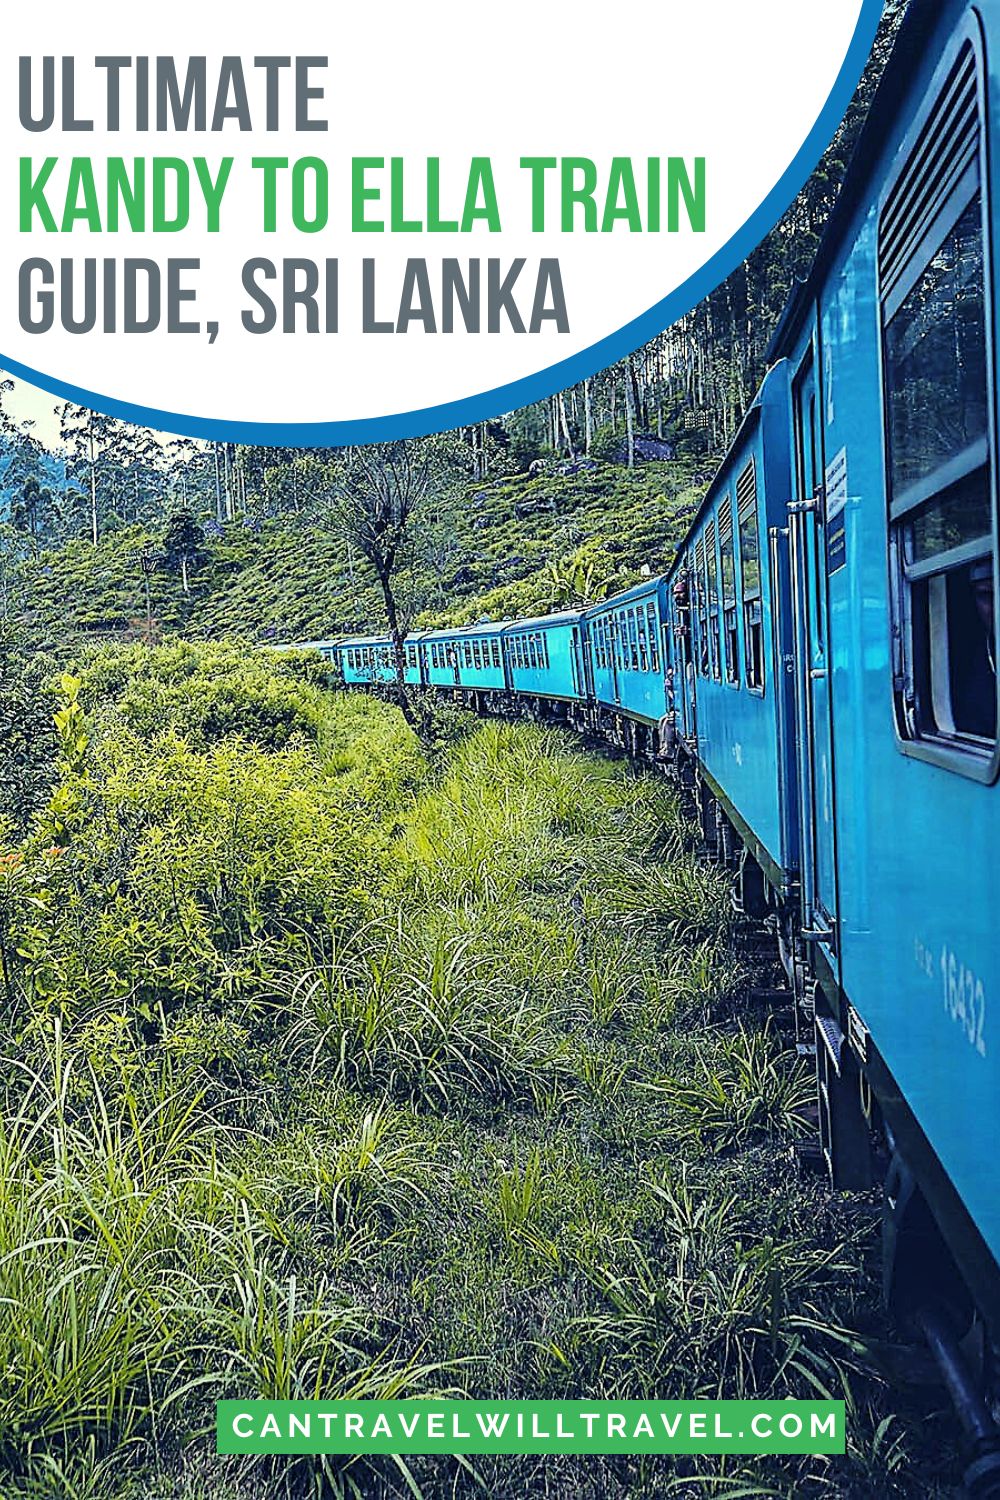 Ultimate Kandy to Ella Train Guide, Sri Lanka